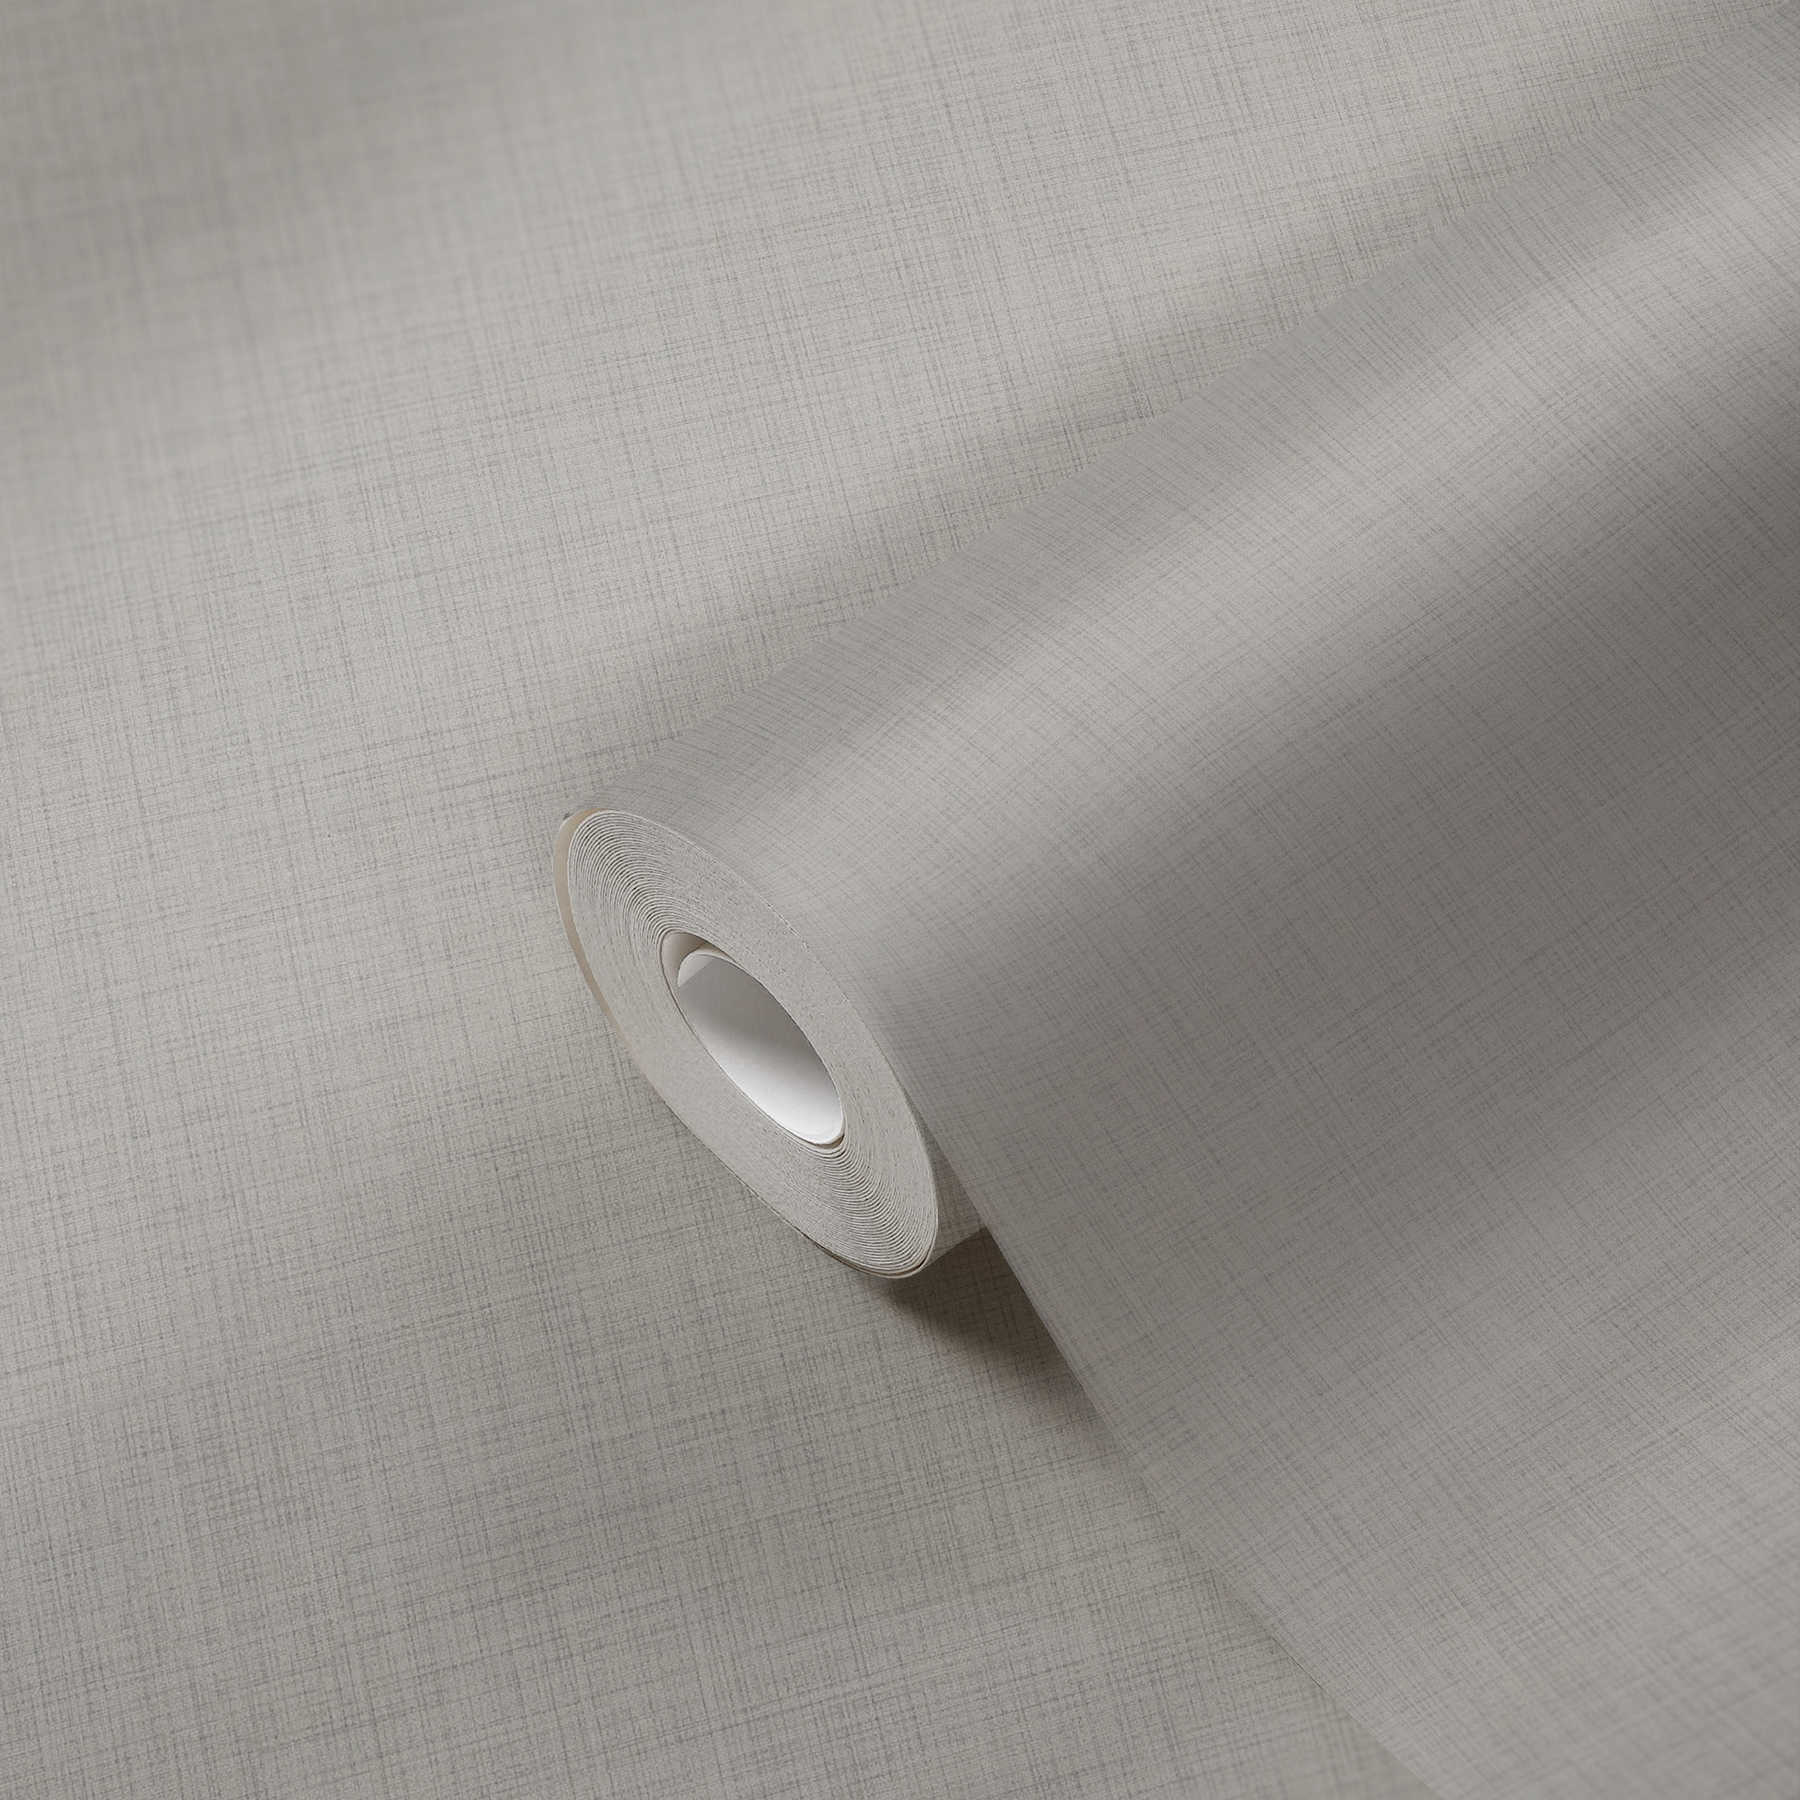             Melierte Tapete Beige Grau meliert mit textilem Muster
        